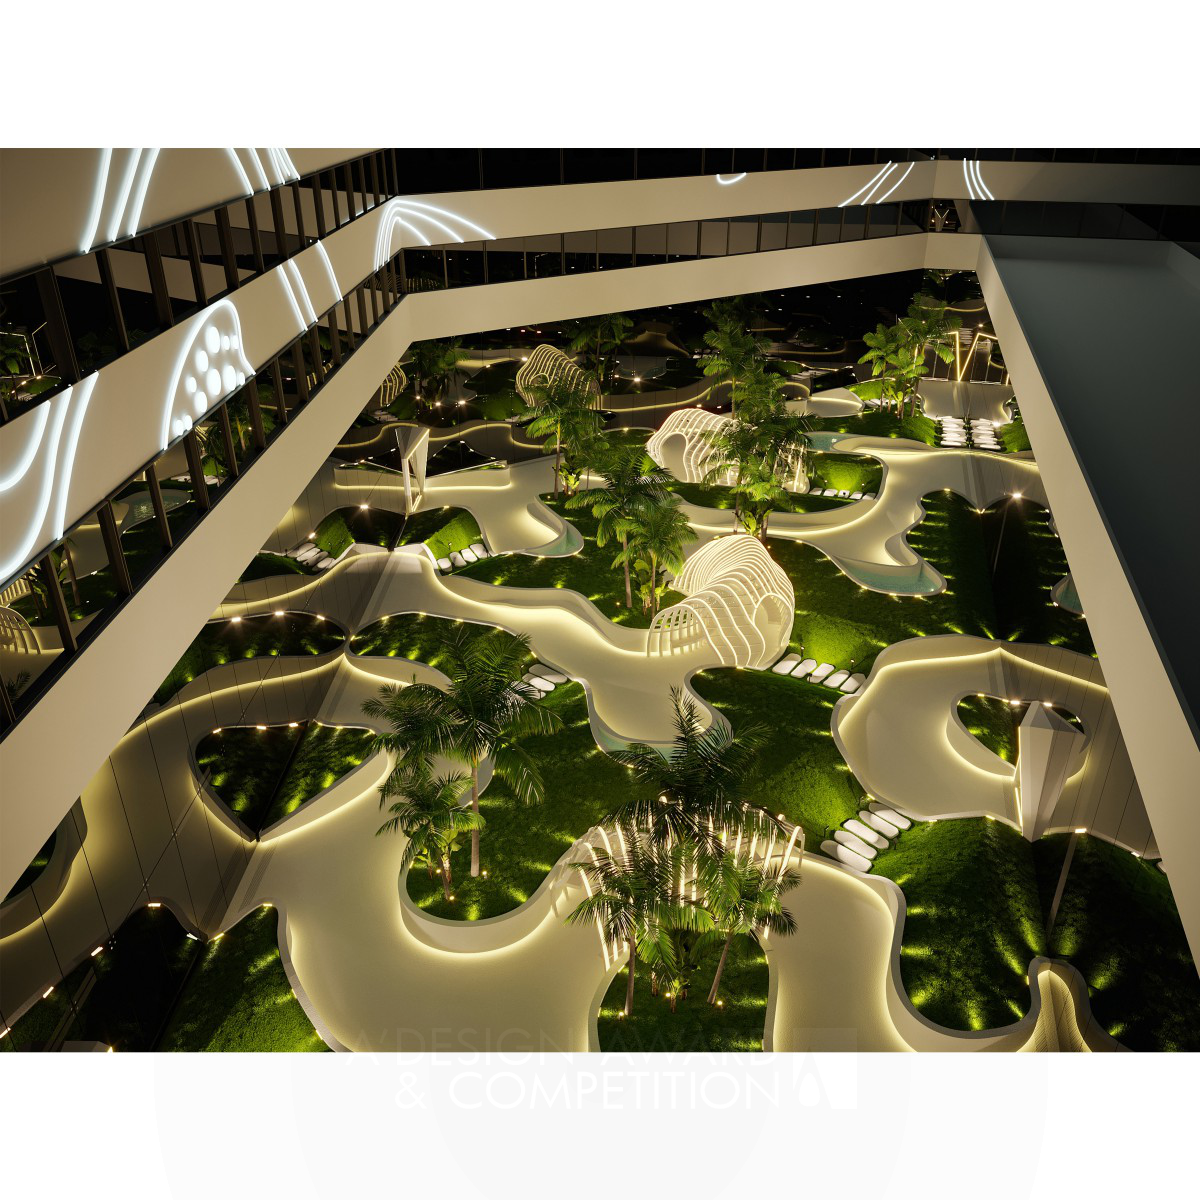 Peyman Kiani Falavarjani wins Silver at the prestigious A' Landscape Planning and Garden Design Award with Mercury Hotel Garden.